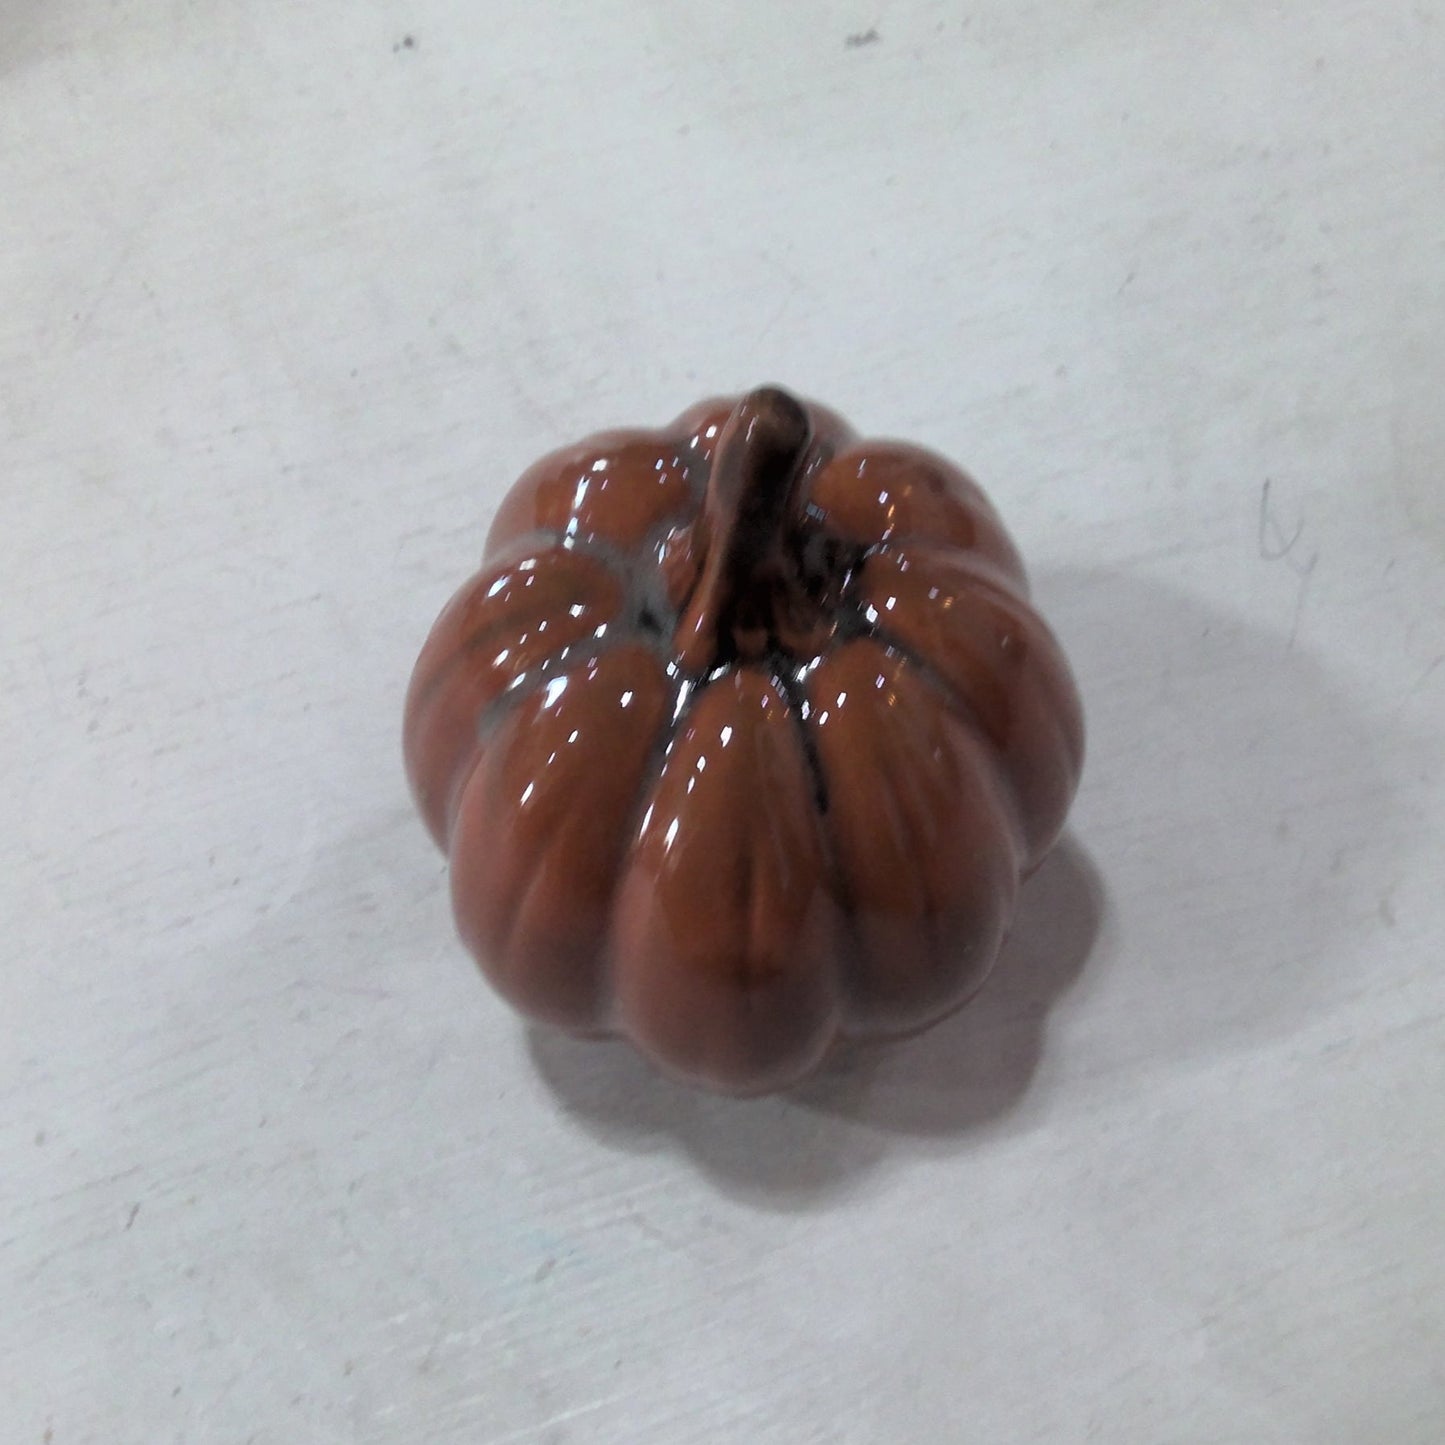 Ceramic Pumpkins #27